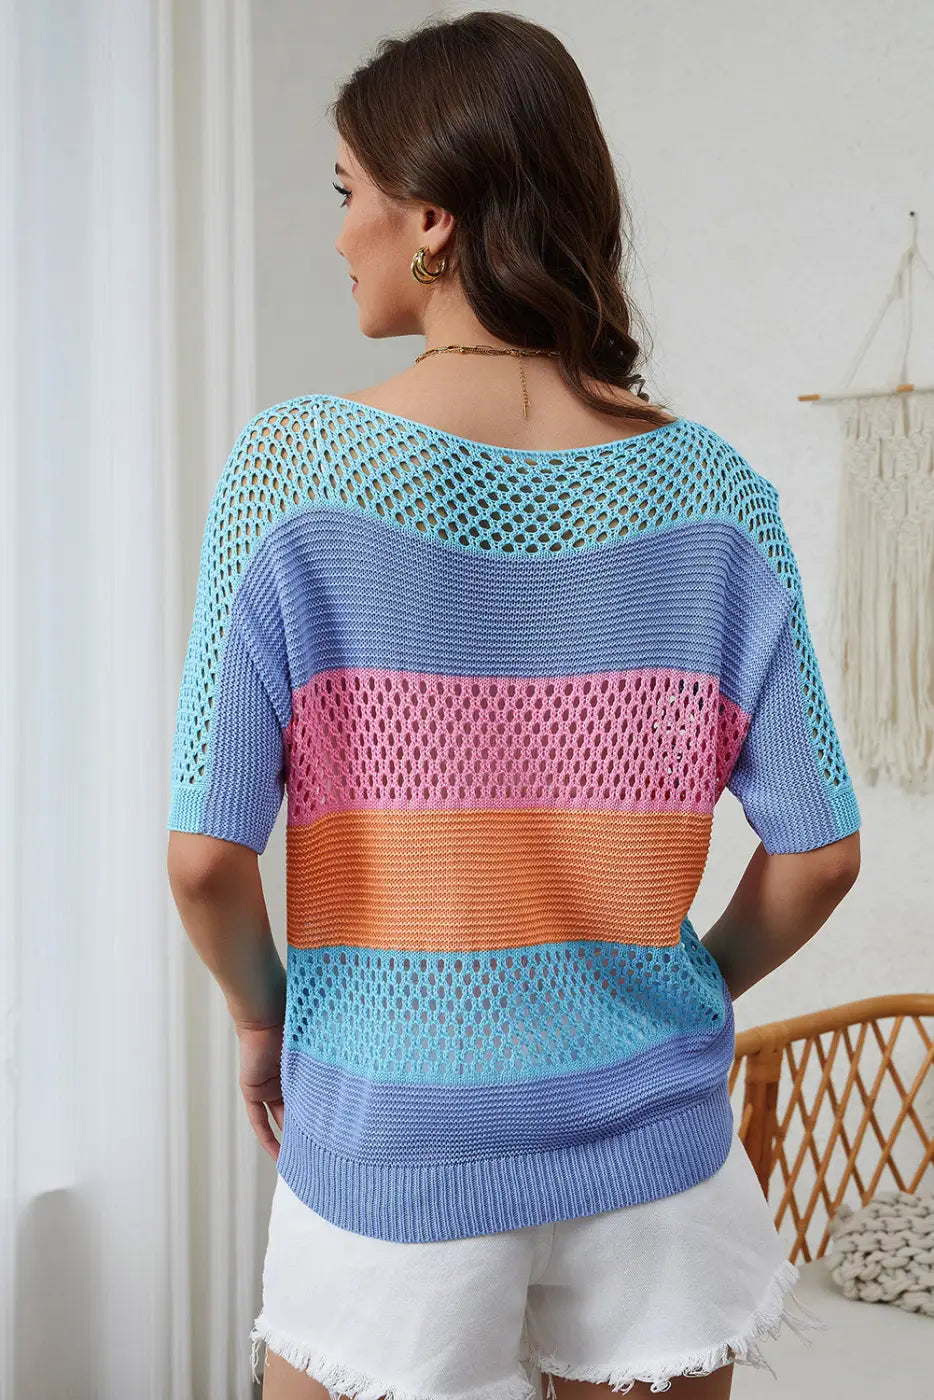 Eyelet knit striped half sleeves top - short sleeve sweaters